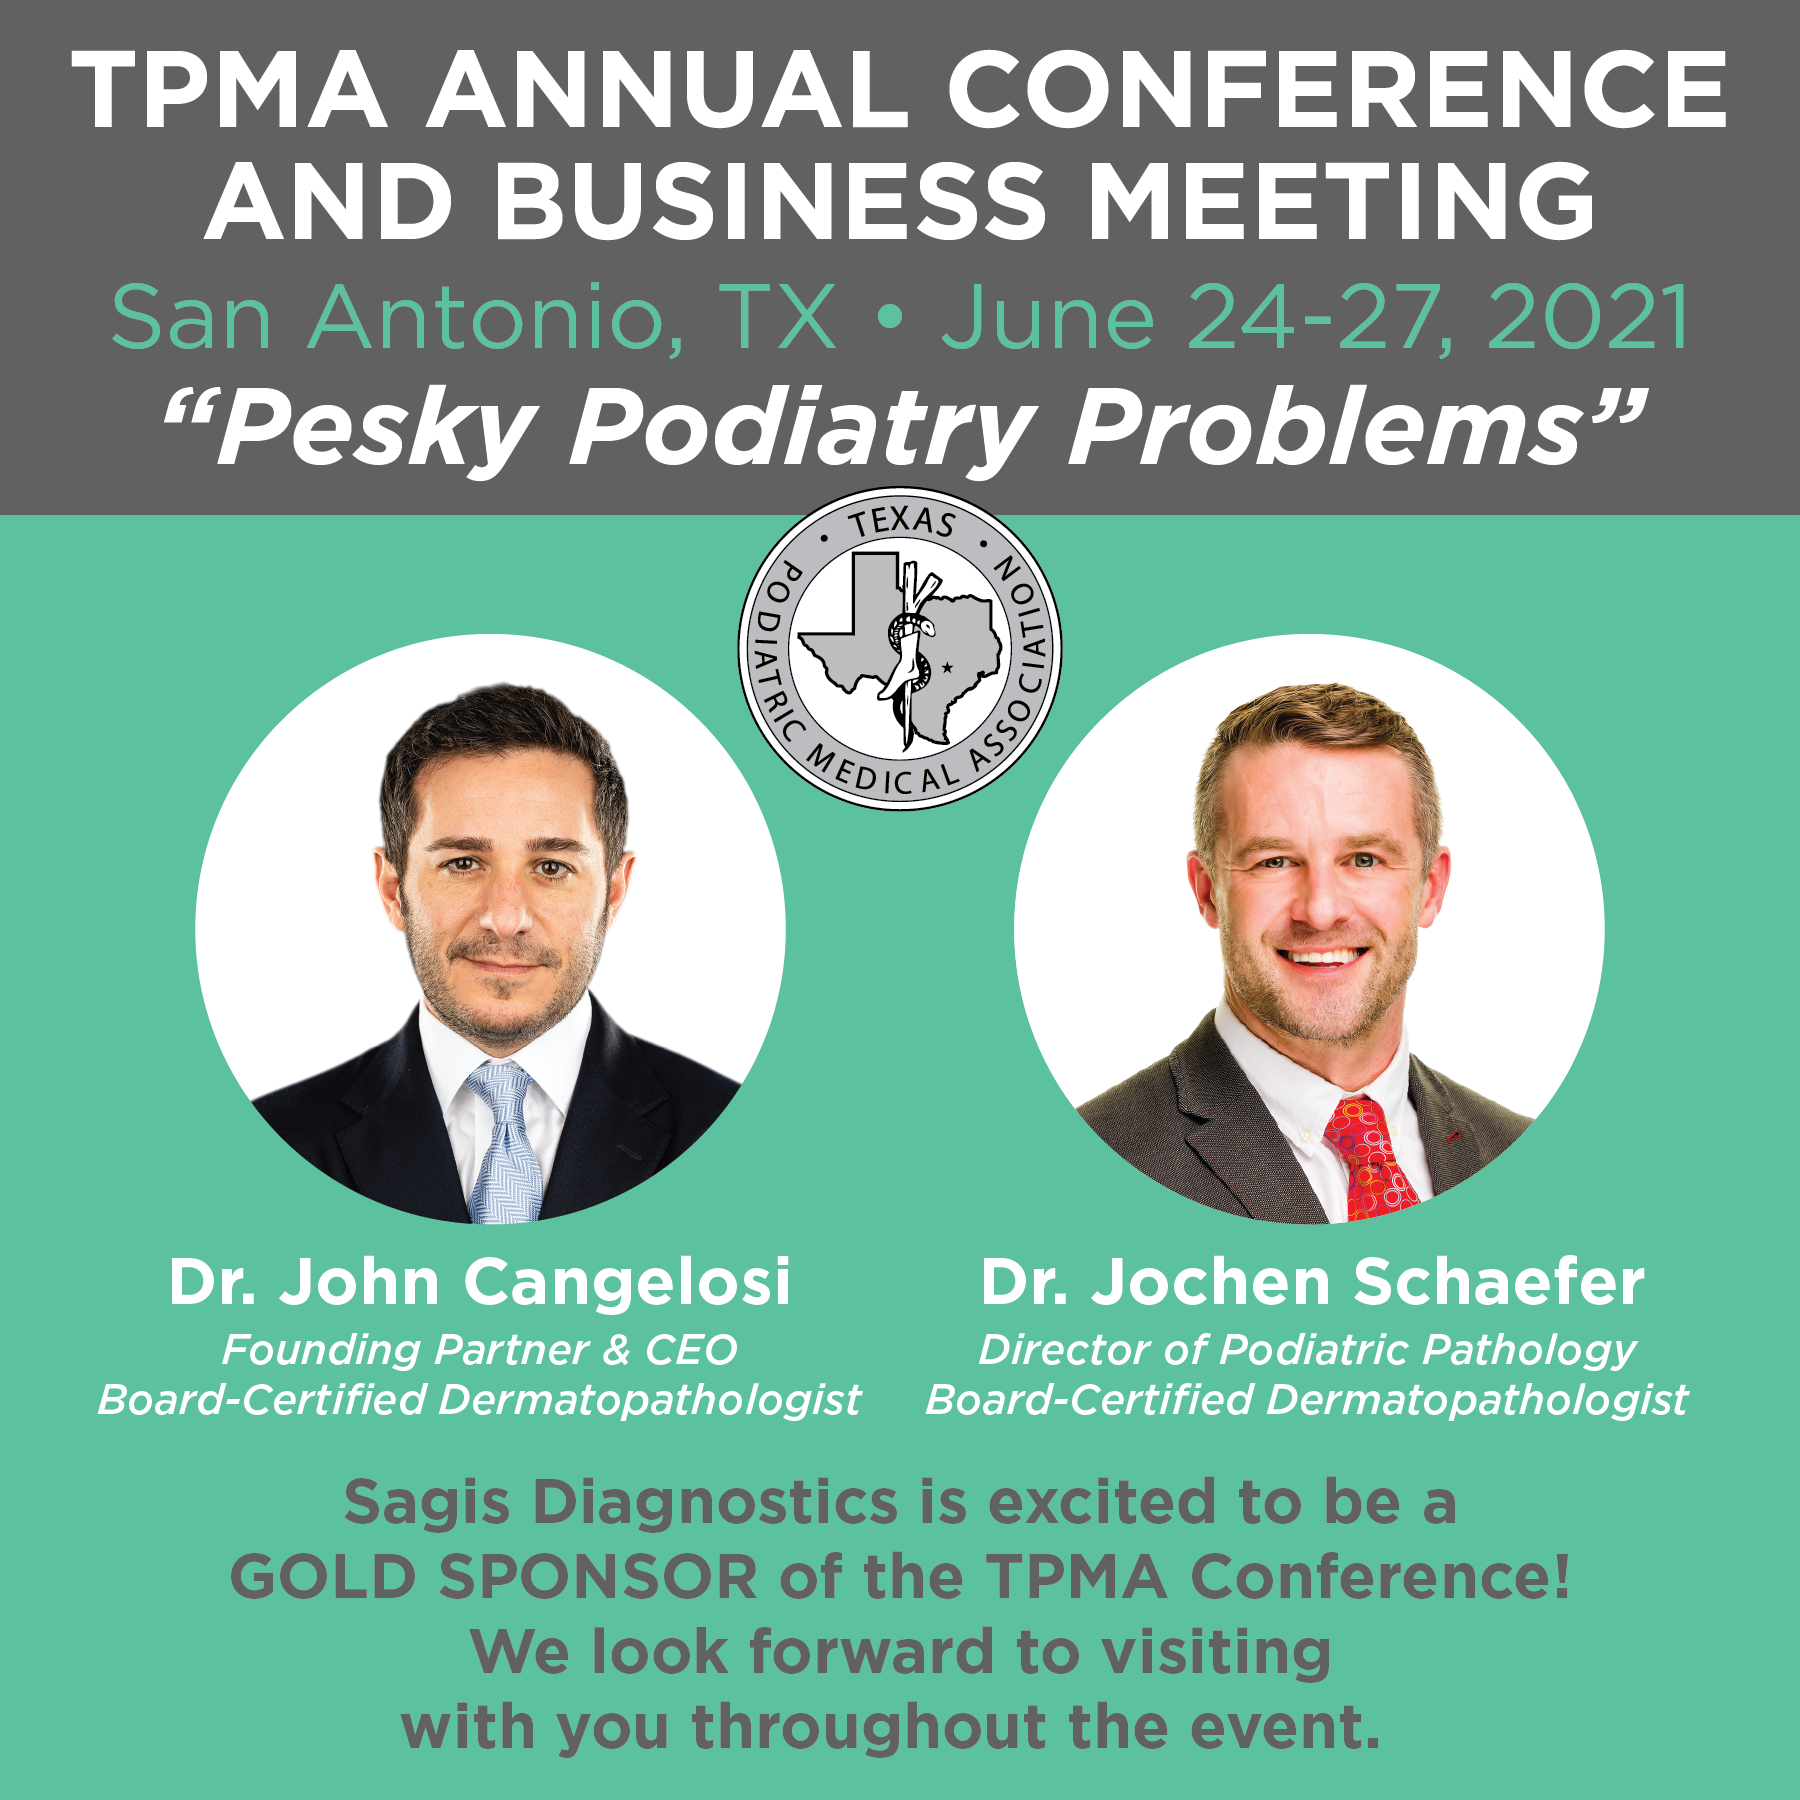 TPMA Annual Conference and Business Meeting, San Antonio — Sagis